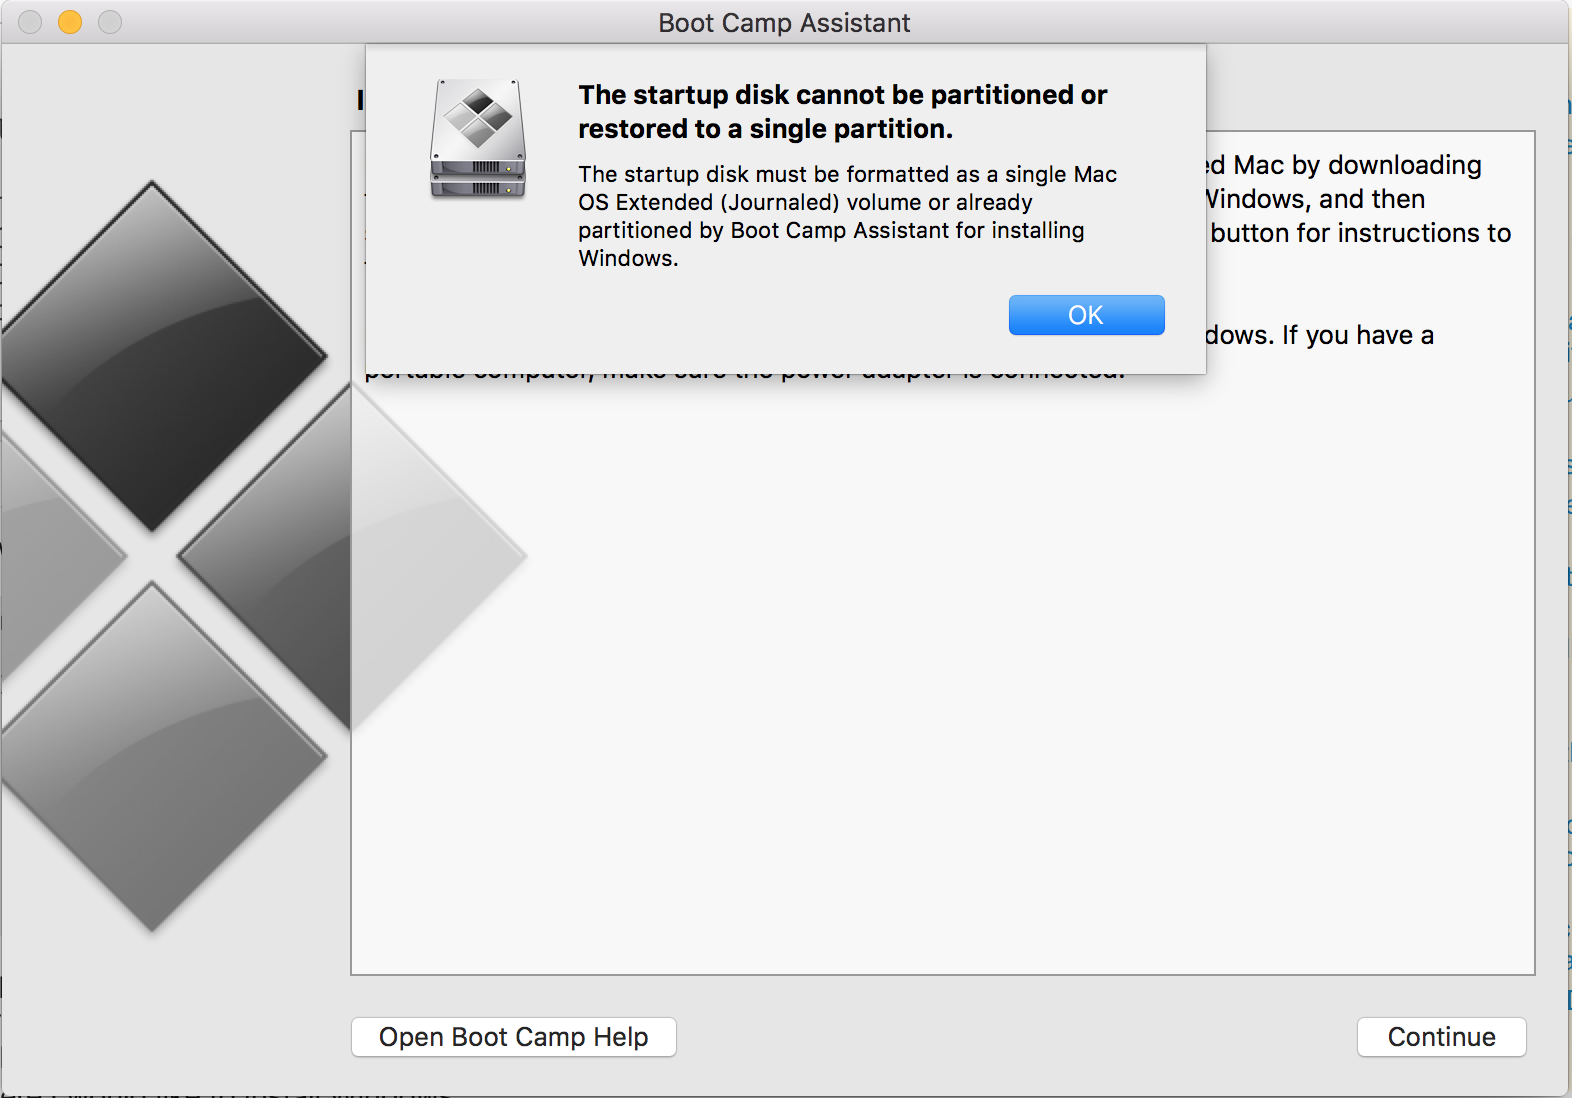 create windows 10 install bootable usb on mac for pc